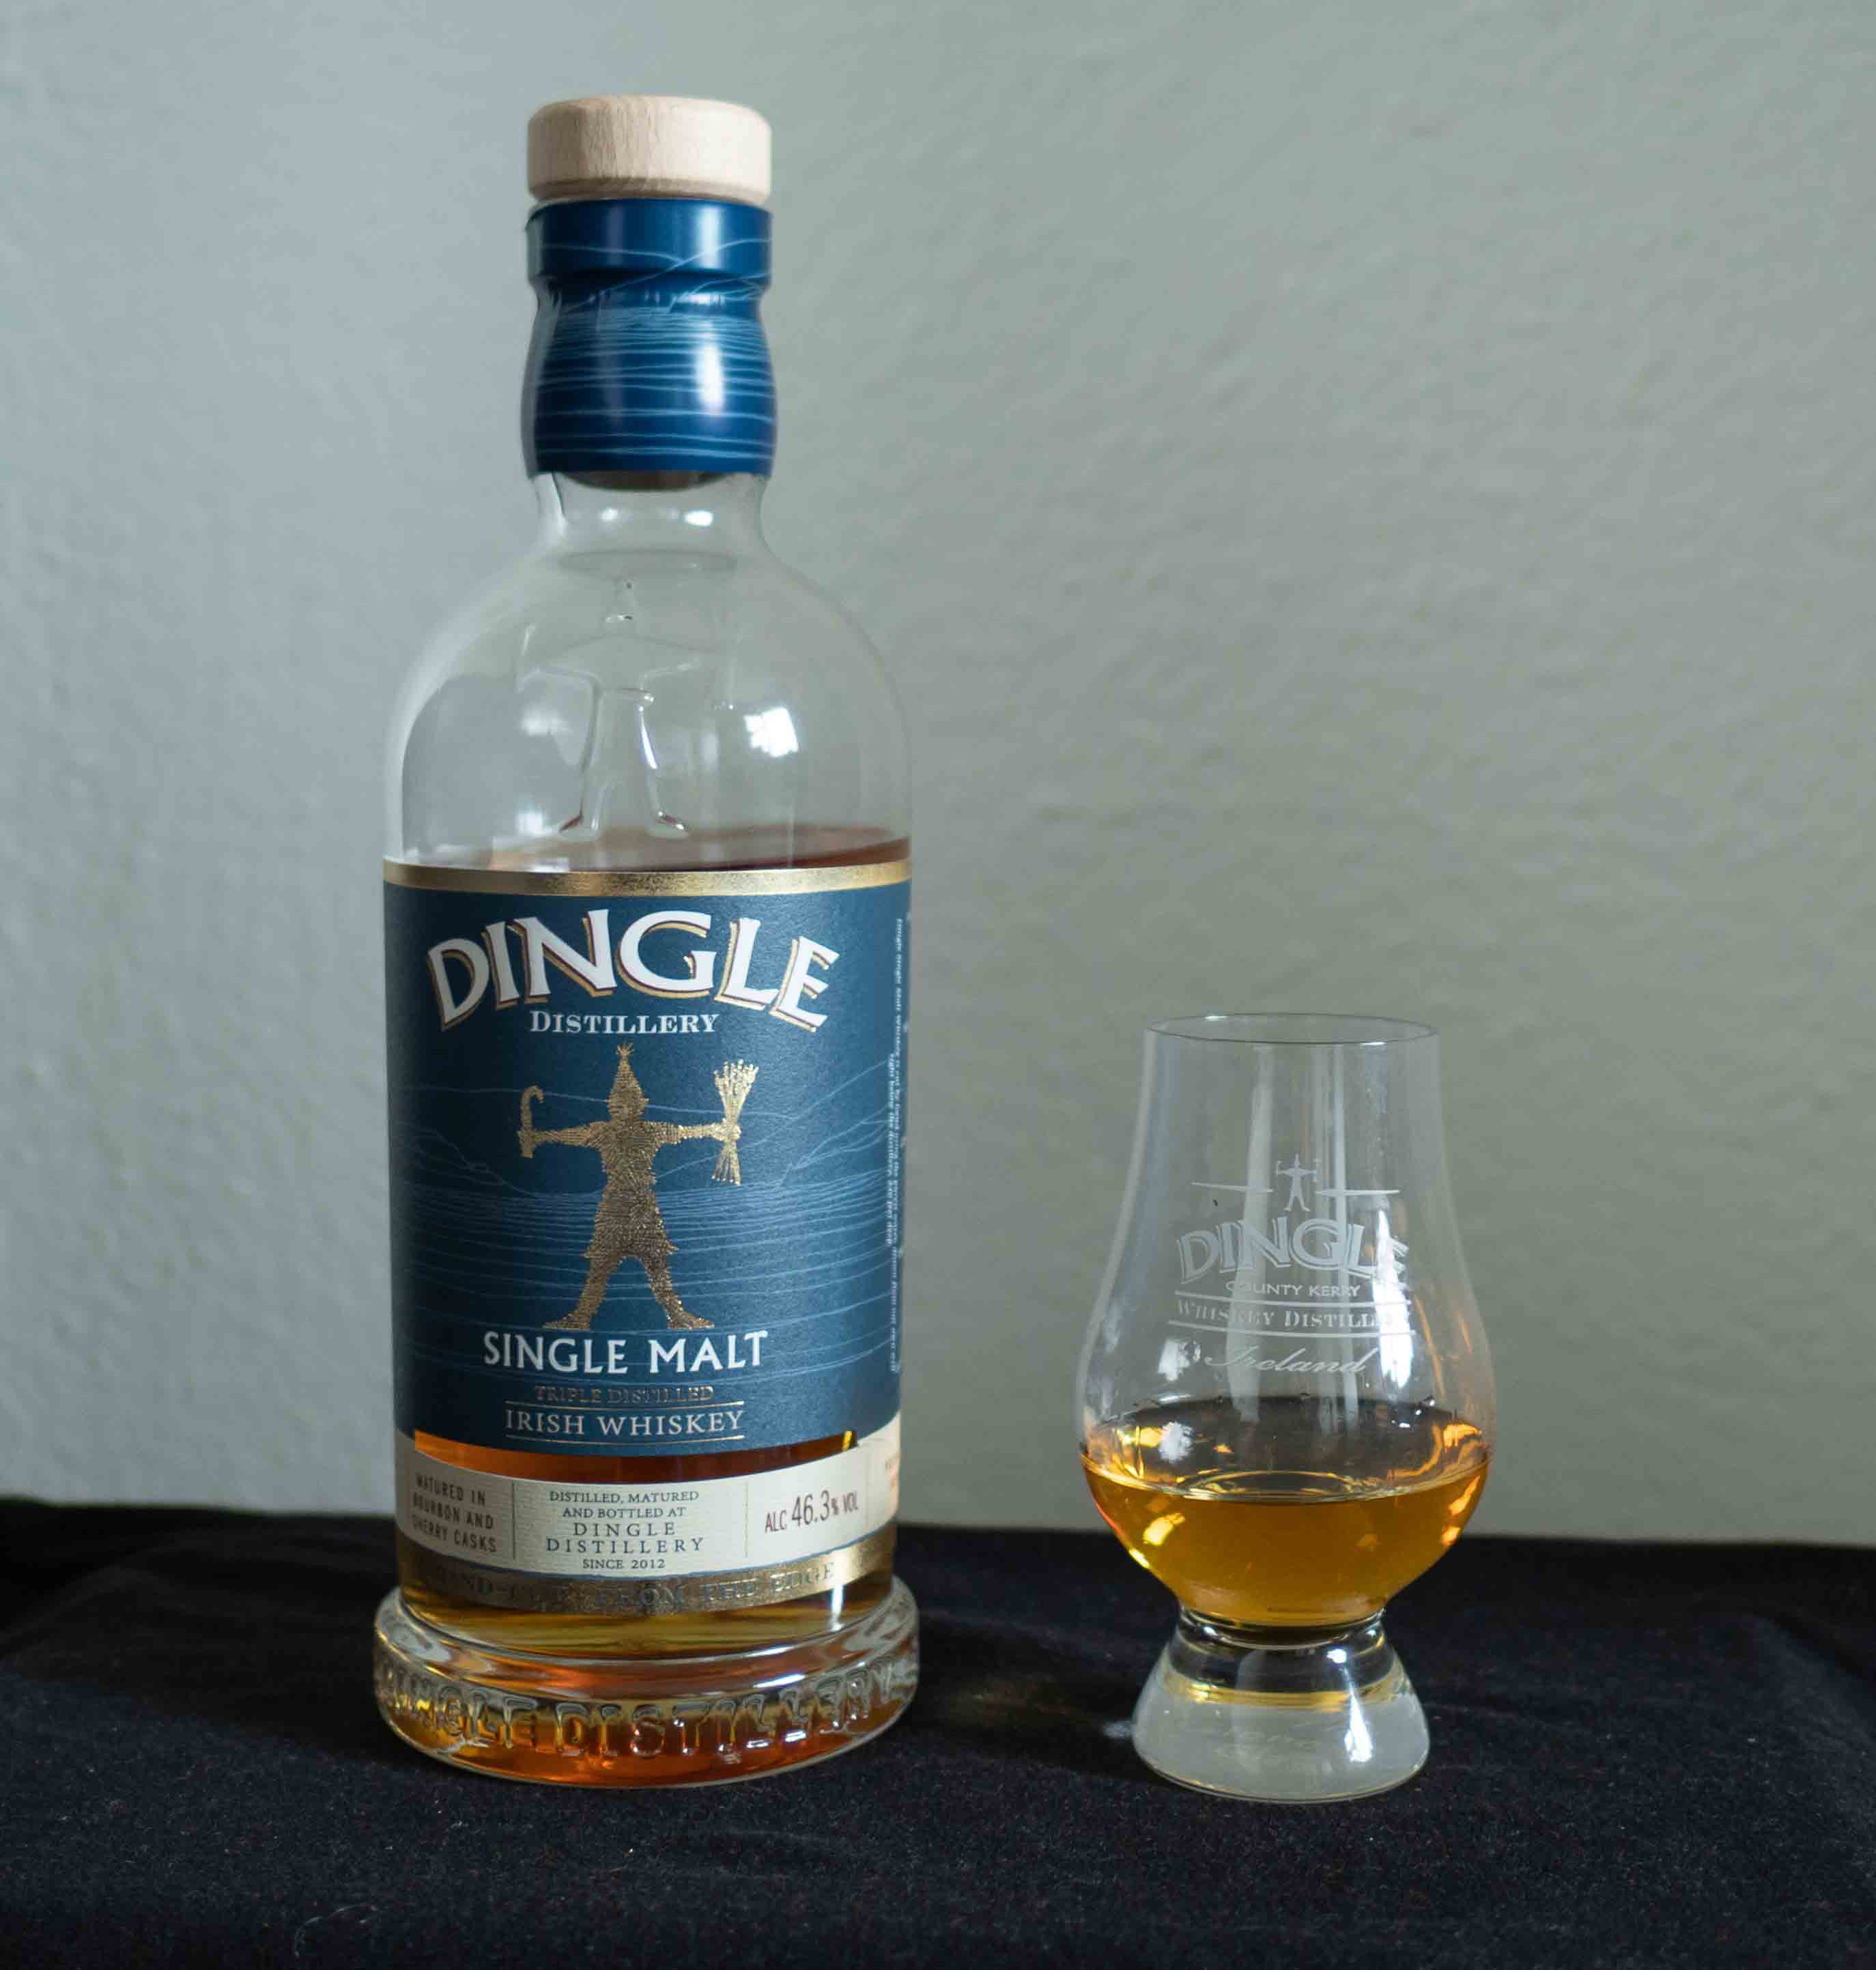 Dingle core range single malt